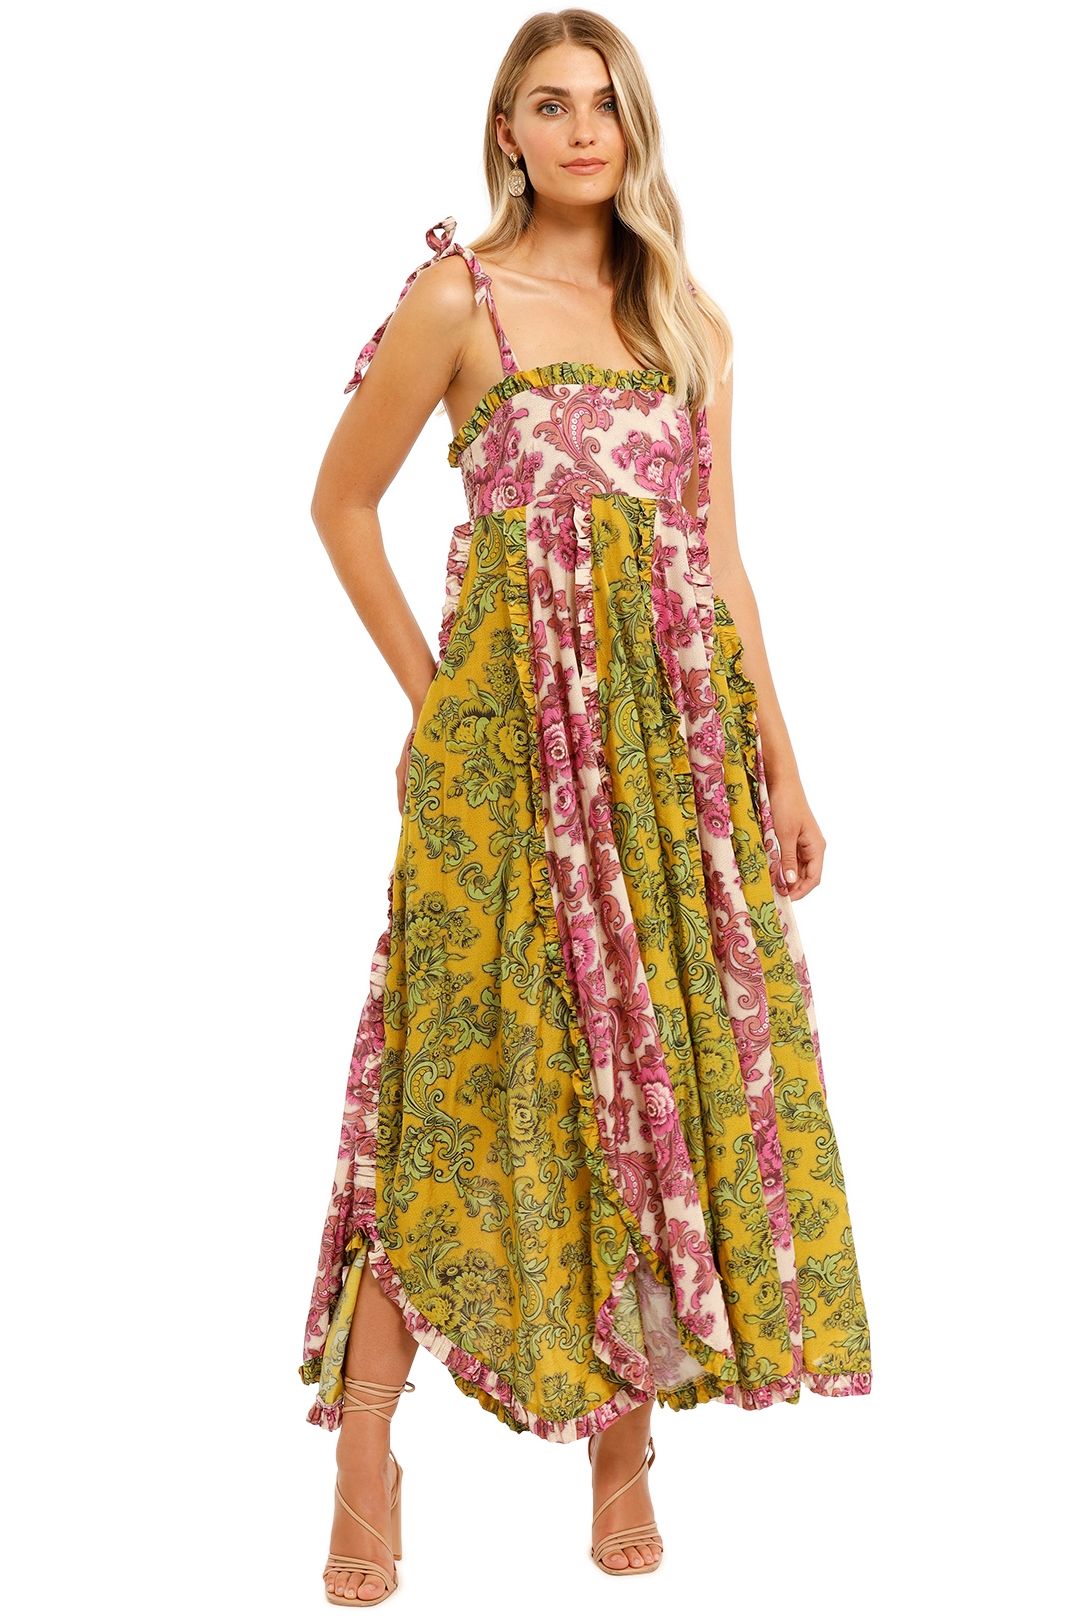 Alemais Rosette Swirl Dress Magenta Lime Square Neck